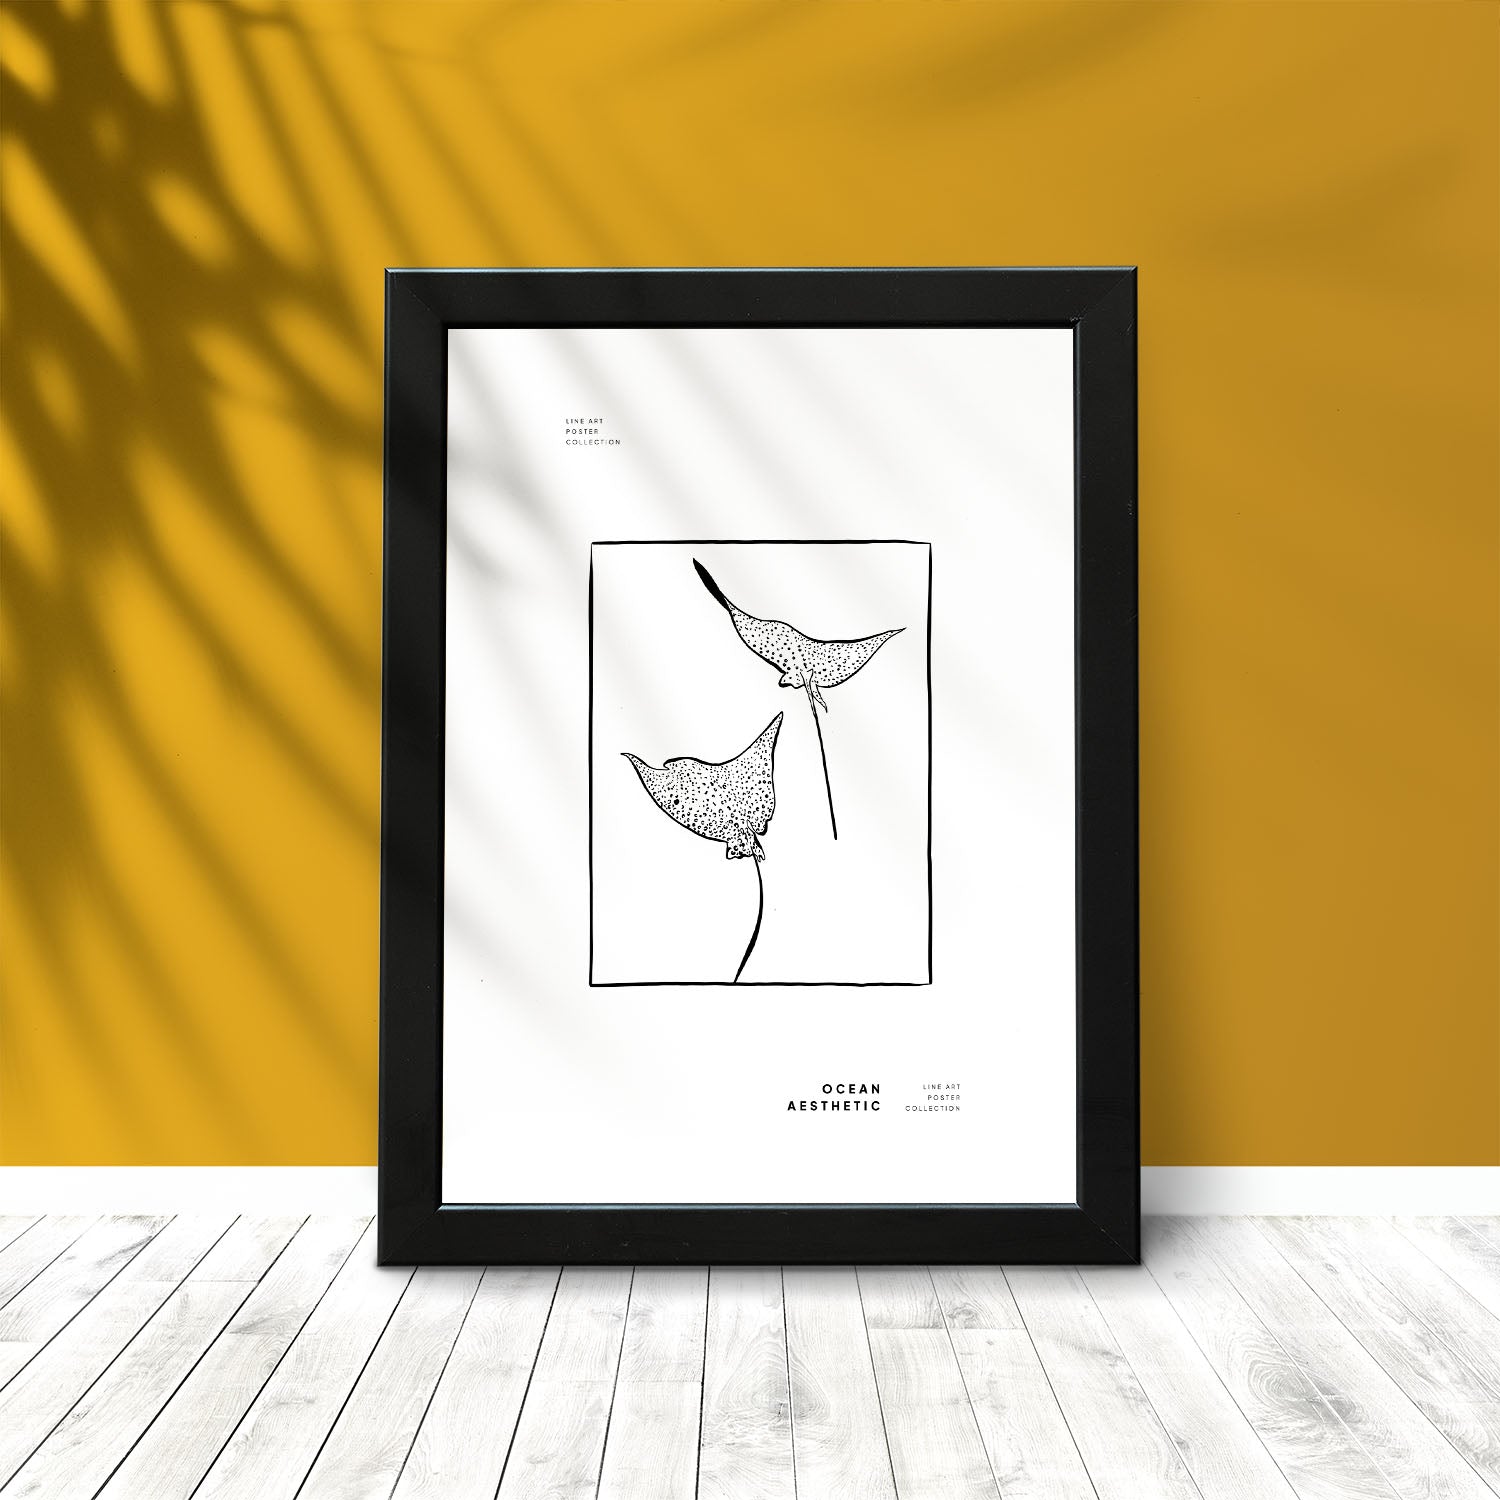 Spotted eagle rays-Artwork-Nacnic-Nacnic Estudio SL